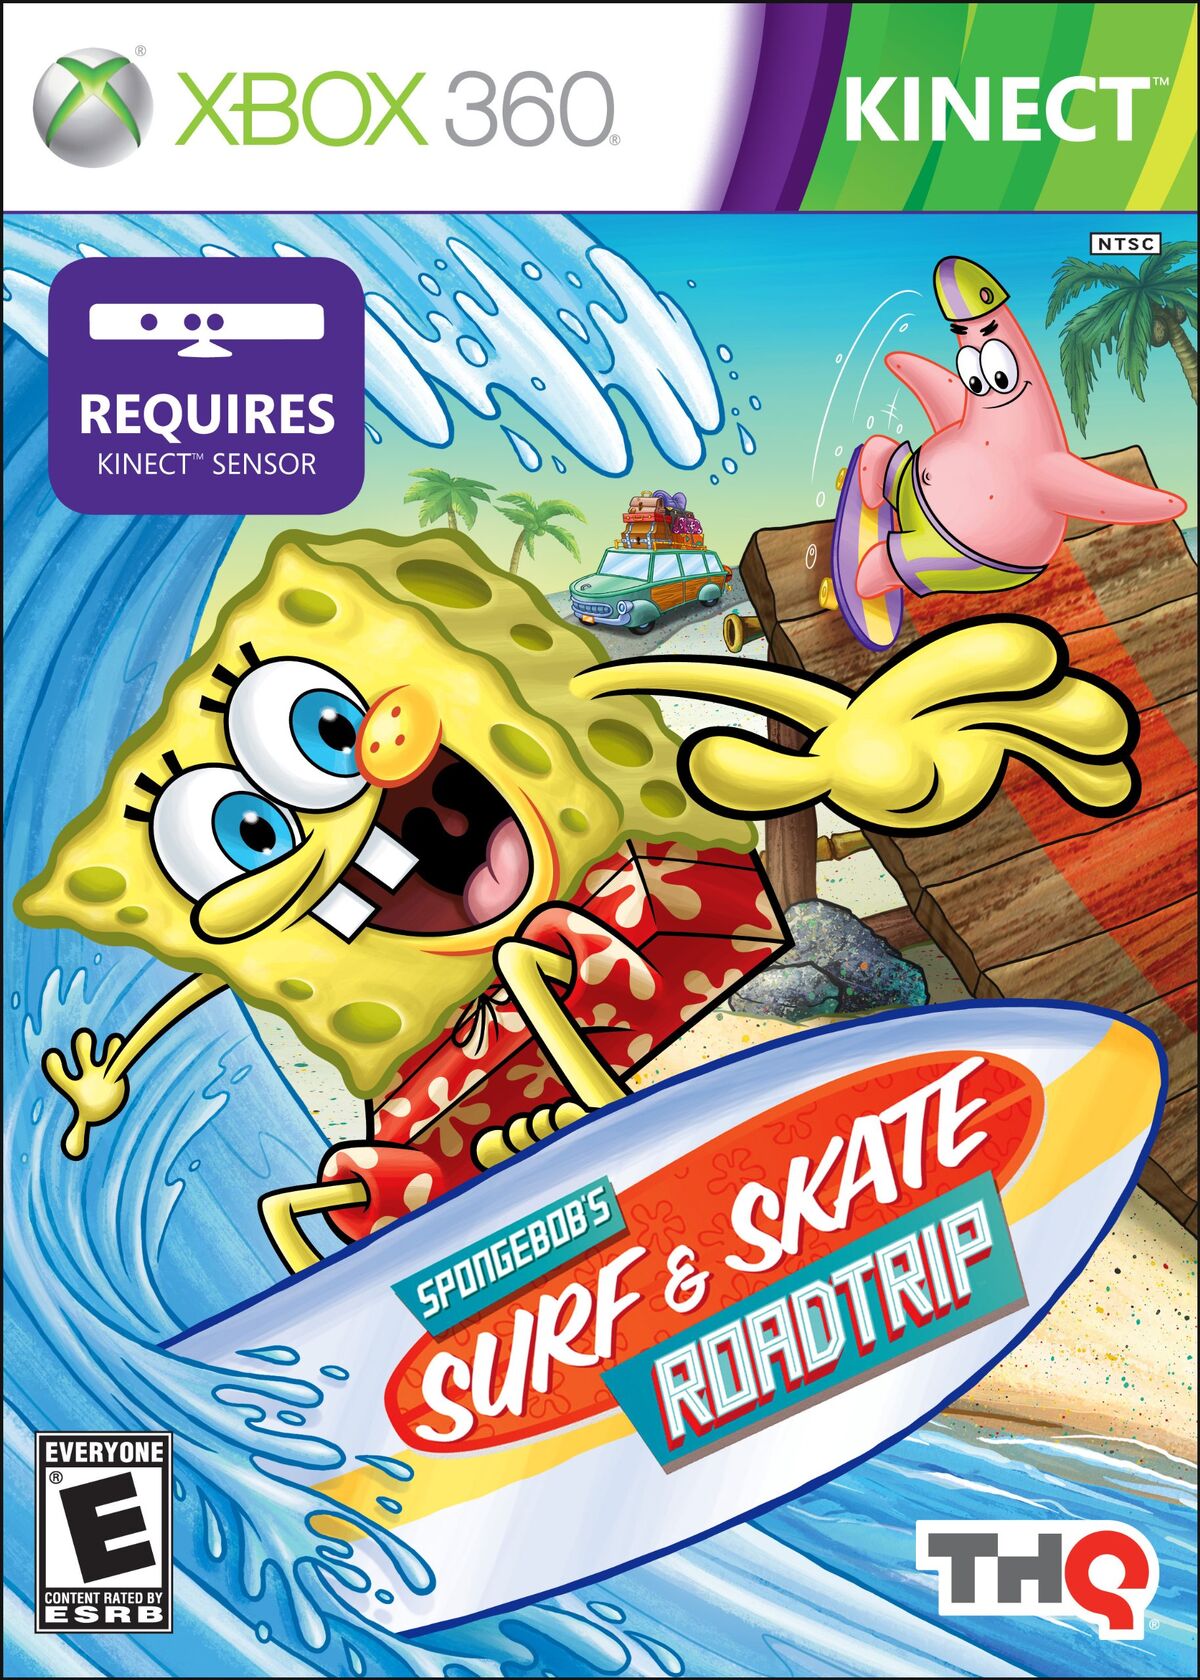 Skate 2 Updated Hands-On - GameSpot